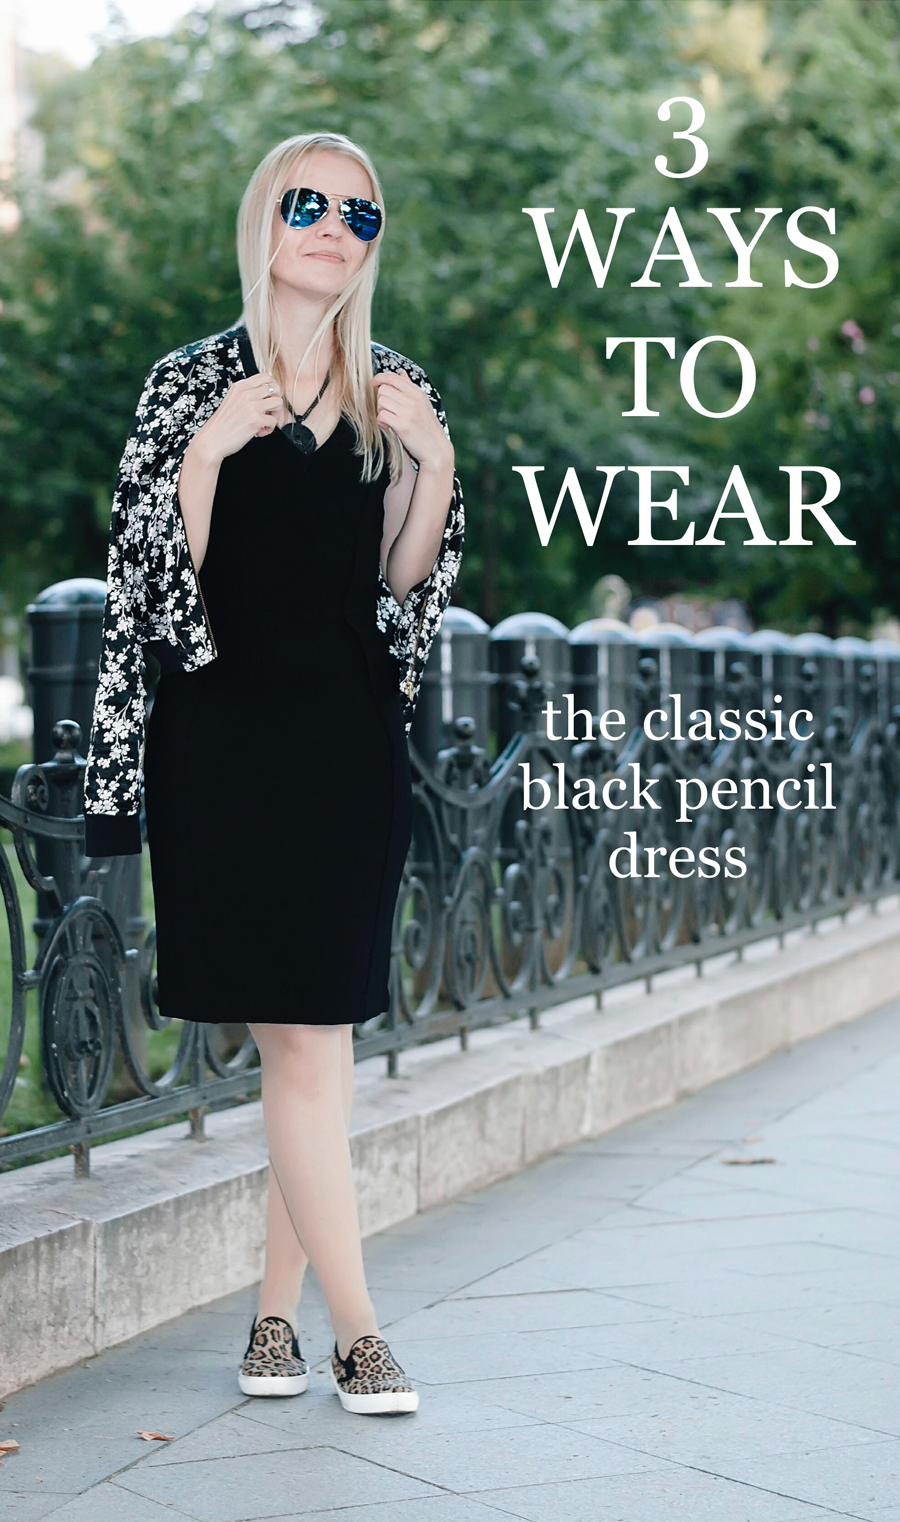 classic-black-pencil-dress-lbd-3-ways-wear-epic-street-style